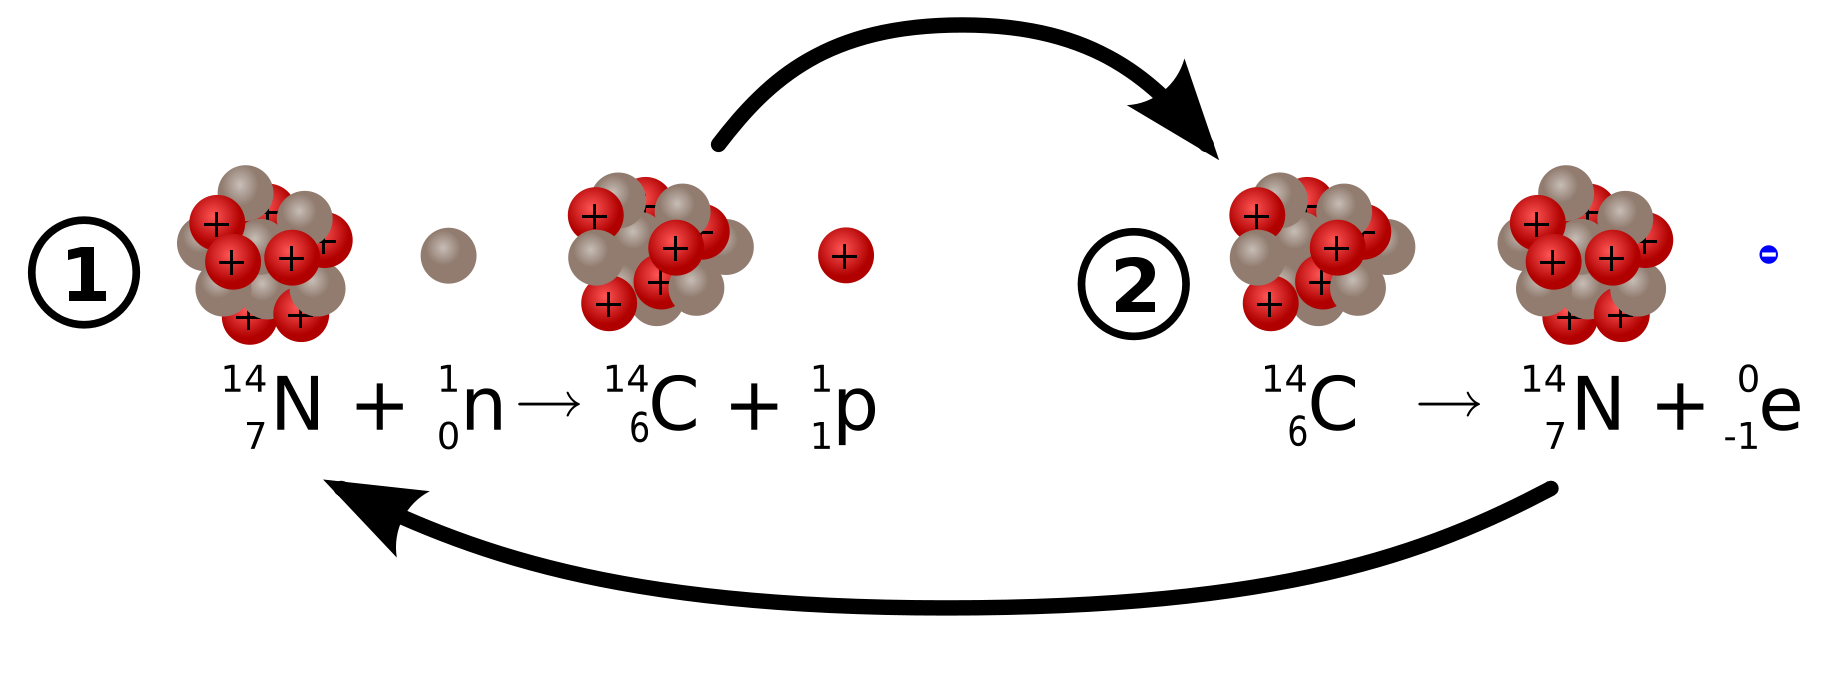 Распад азота 14. Схема распада углерода 14. Схемы радиоактивного распада углерода 14. Изотоп углерода радиоактивный распад. Бета распад углерода.